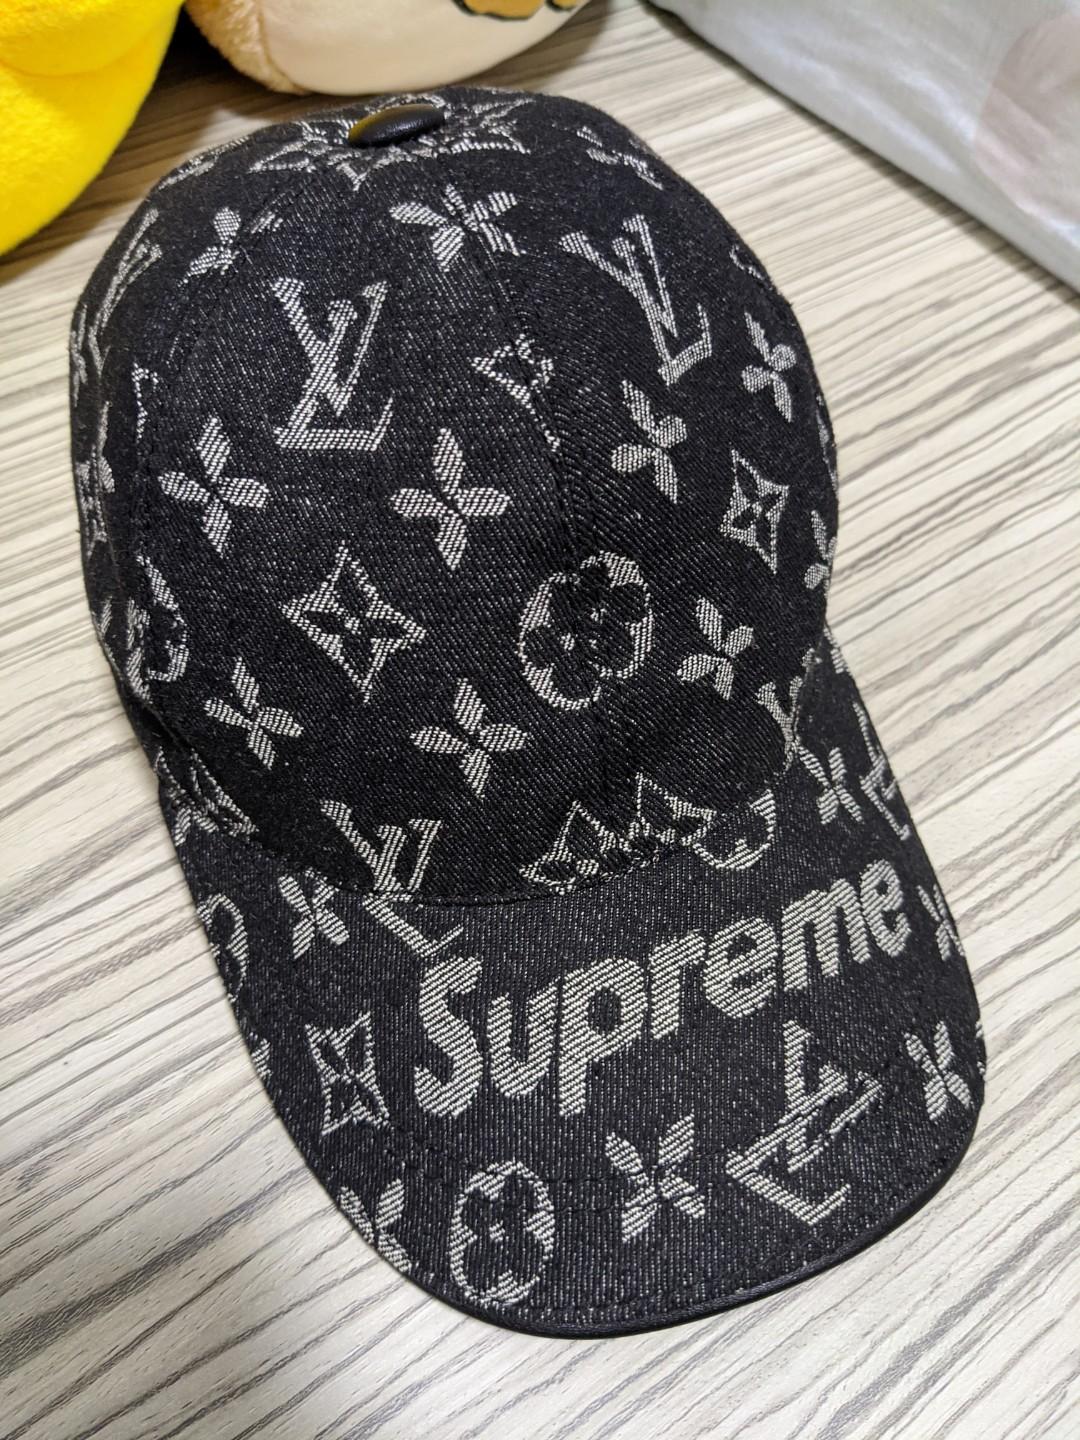 Supreme Lv Hats